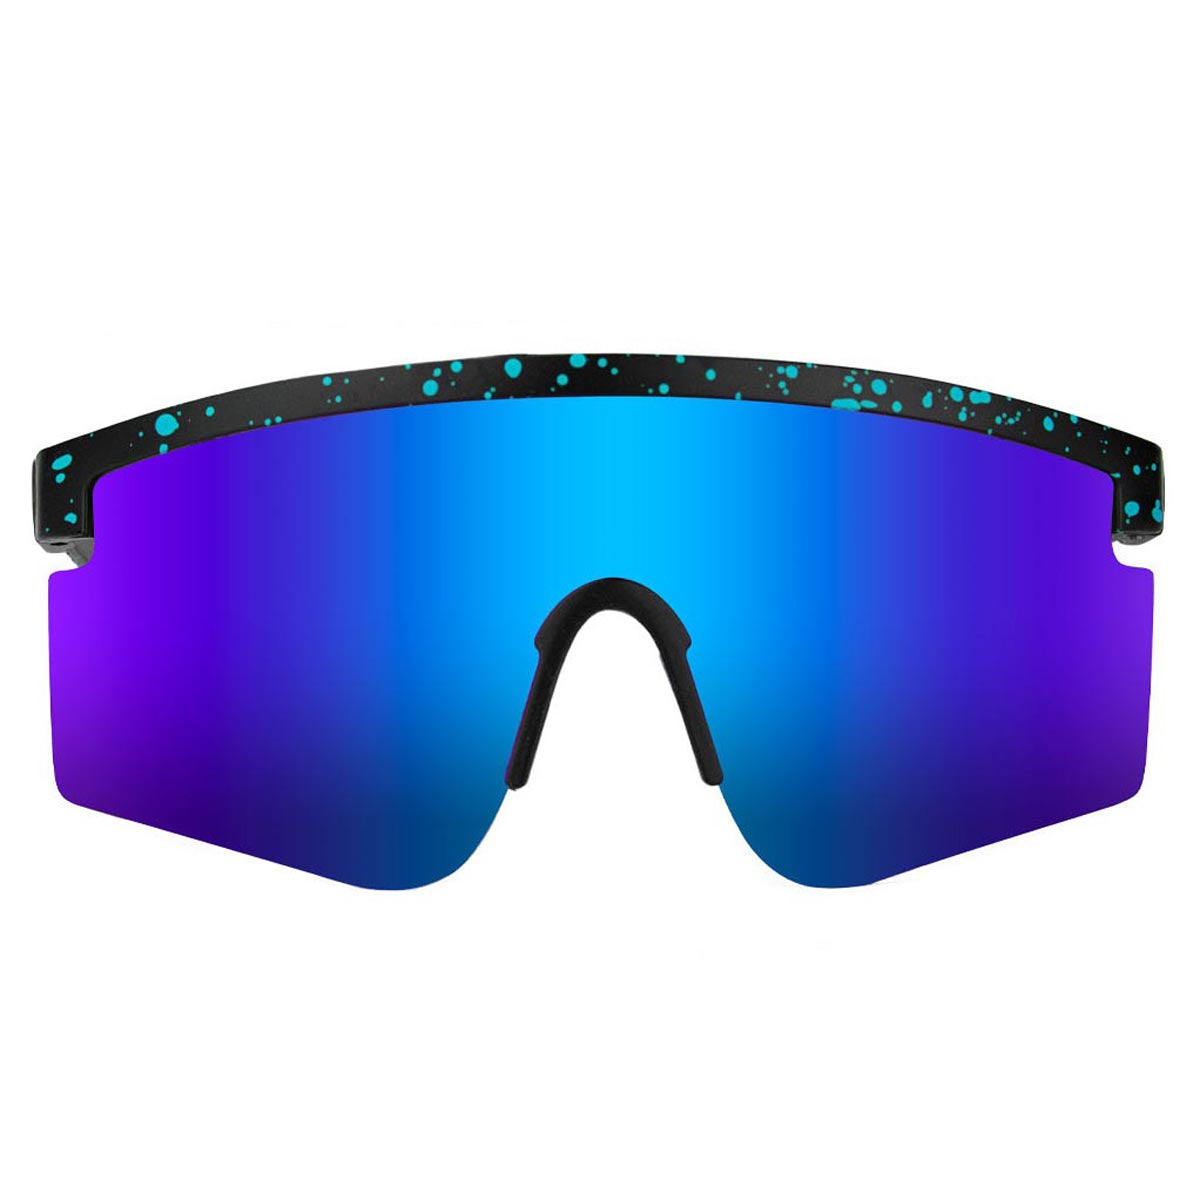 Glassy Mojave Polarized Sunglasses - Black/Blue Mirror image 2